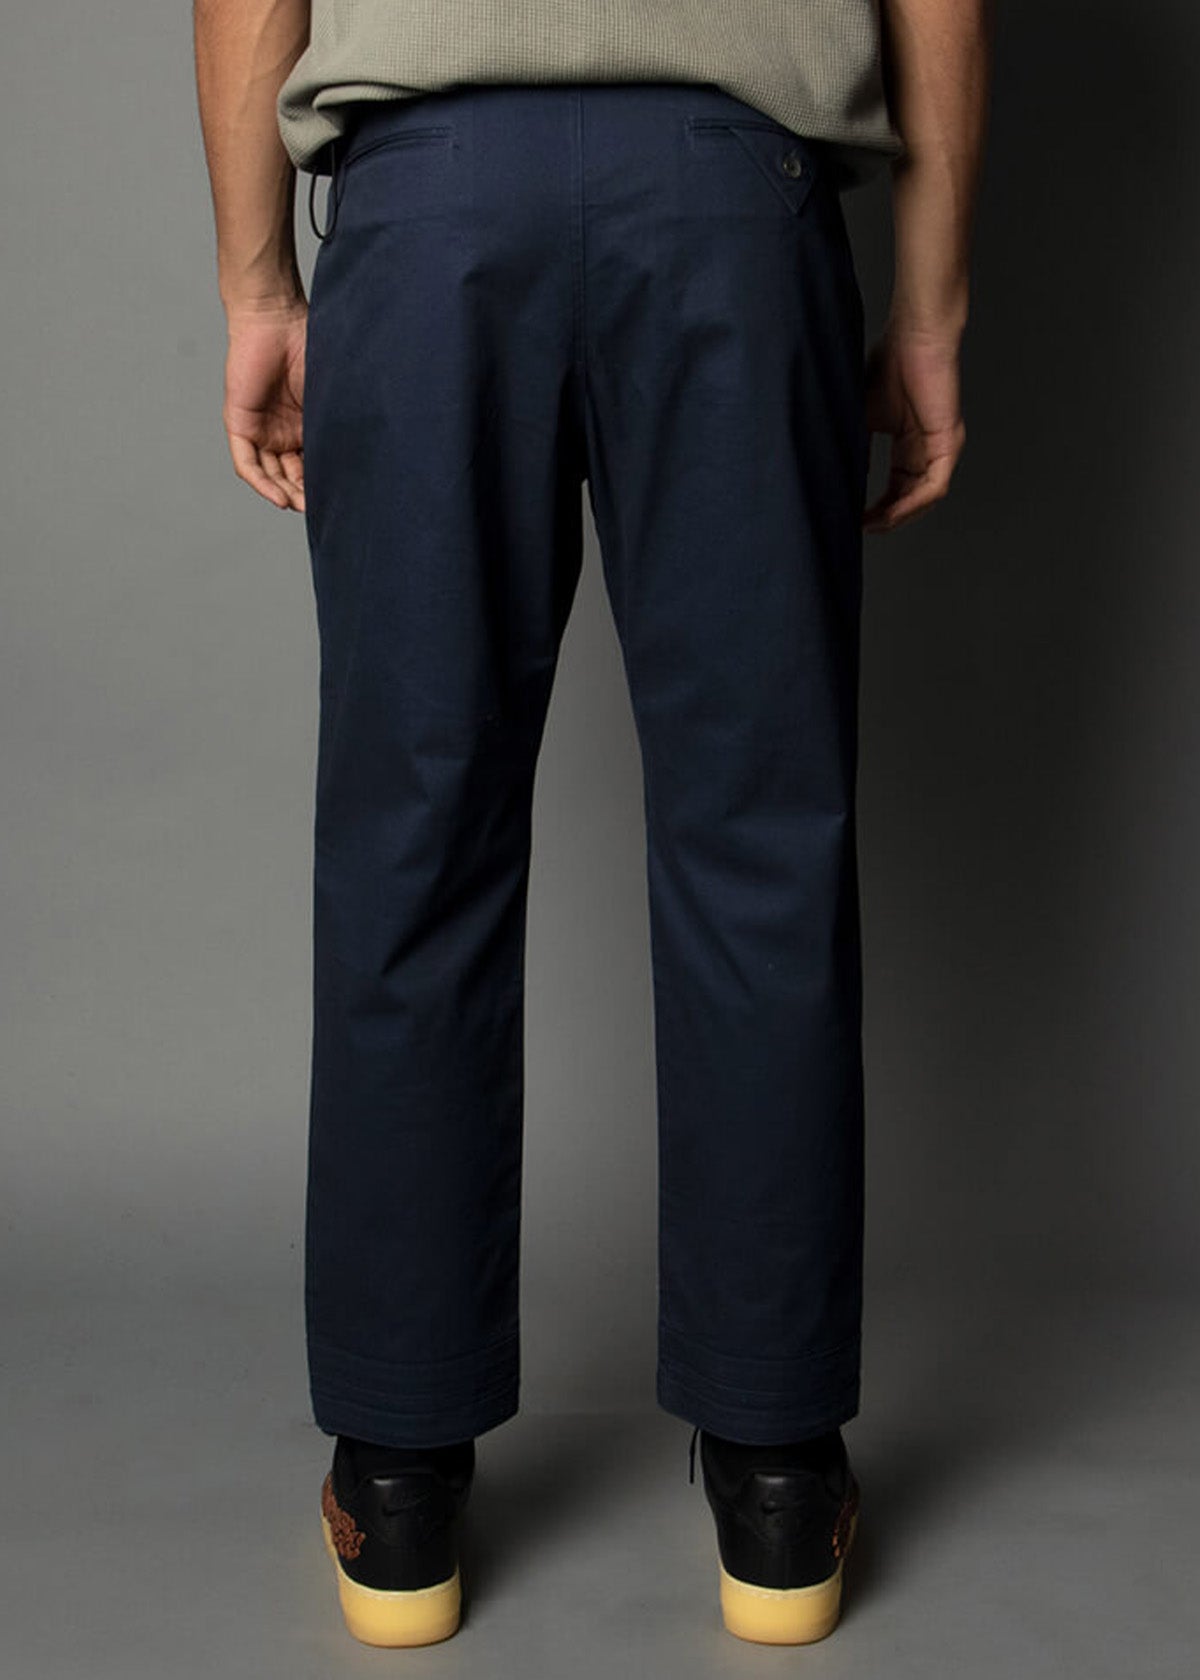 regular fit mens pants in a navy blue colort